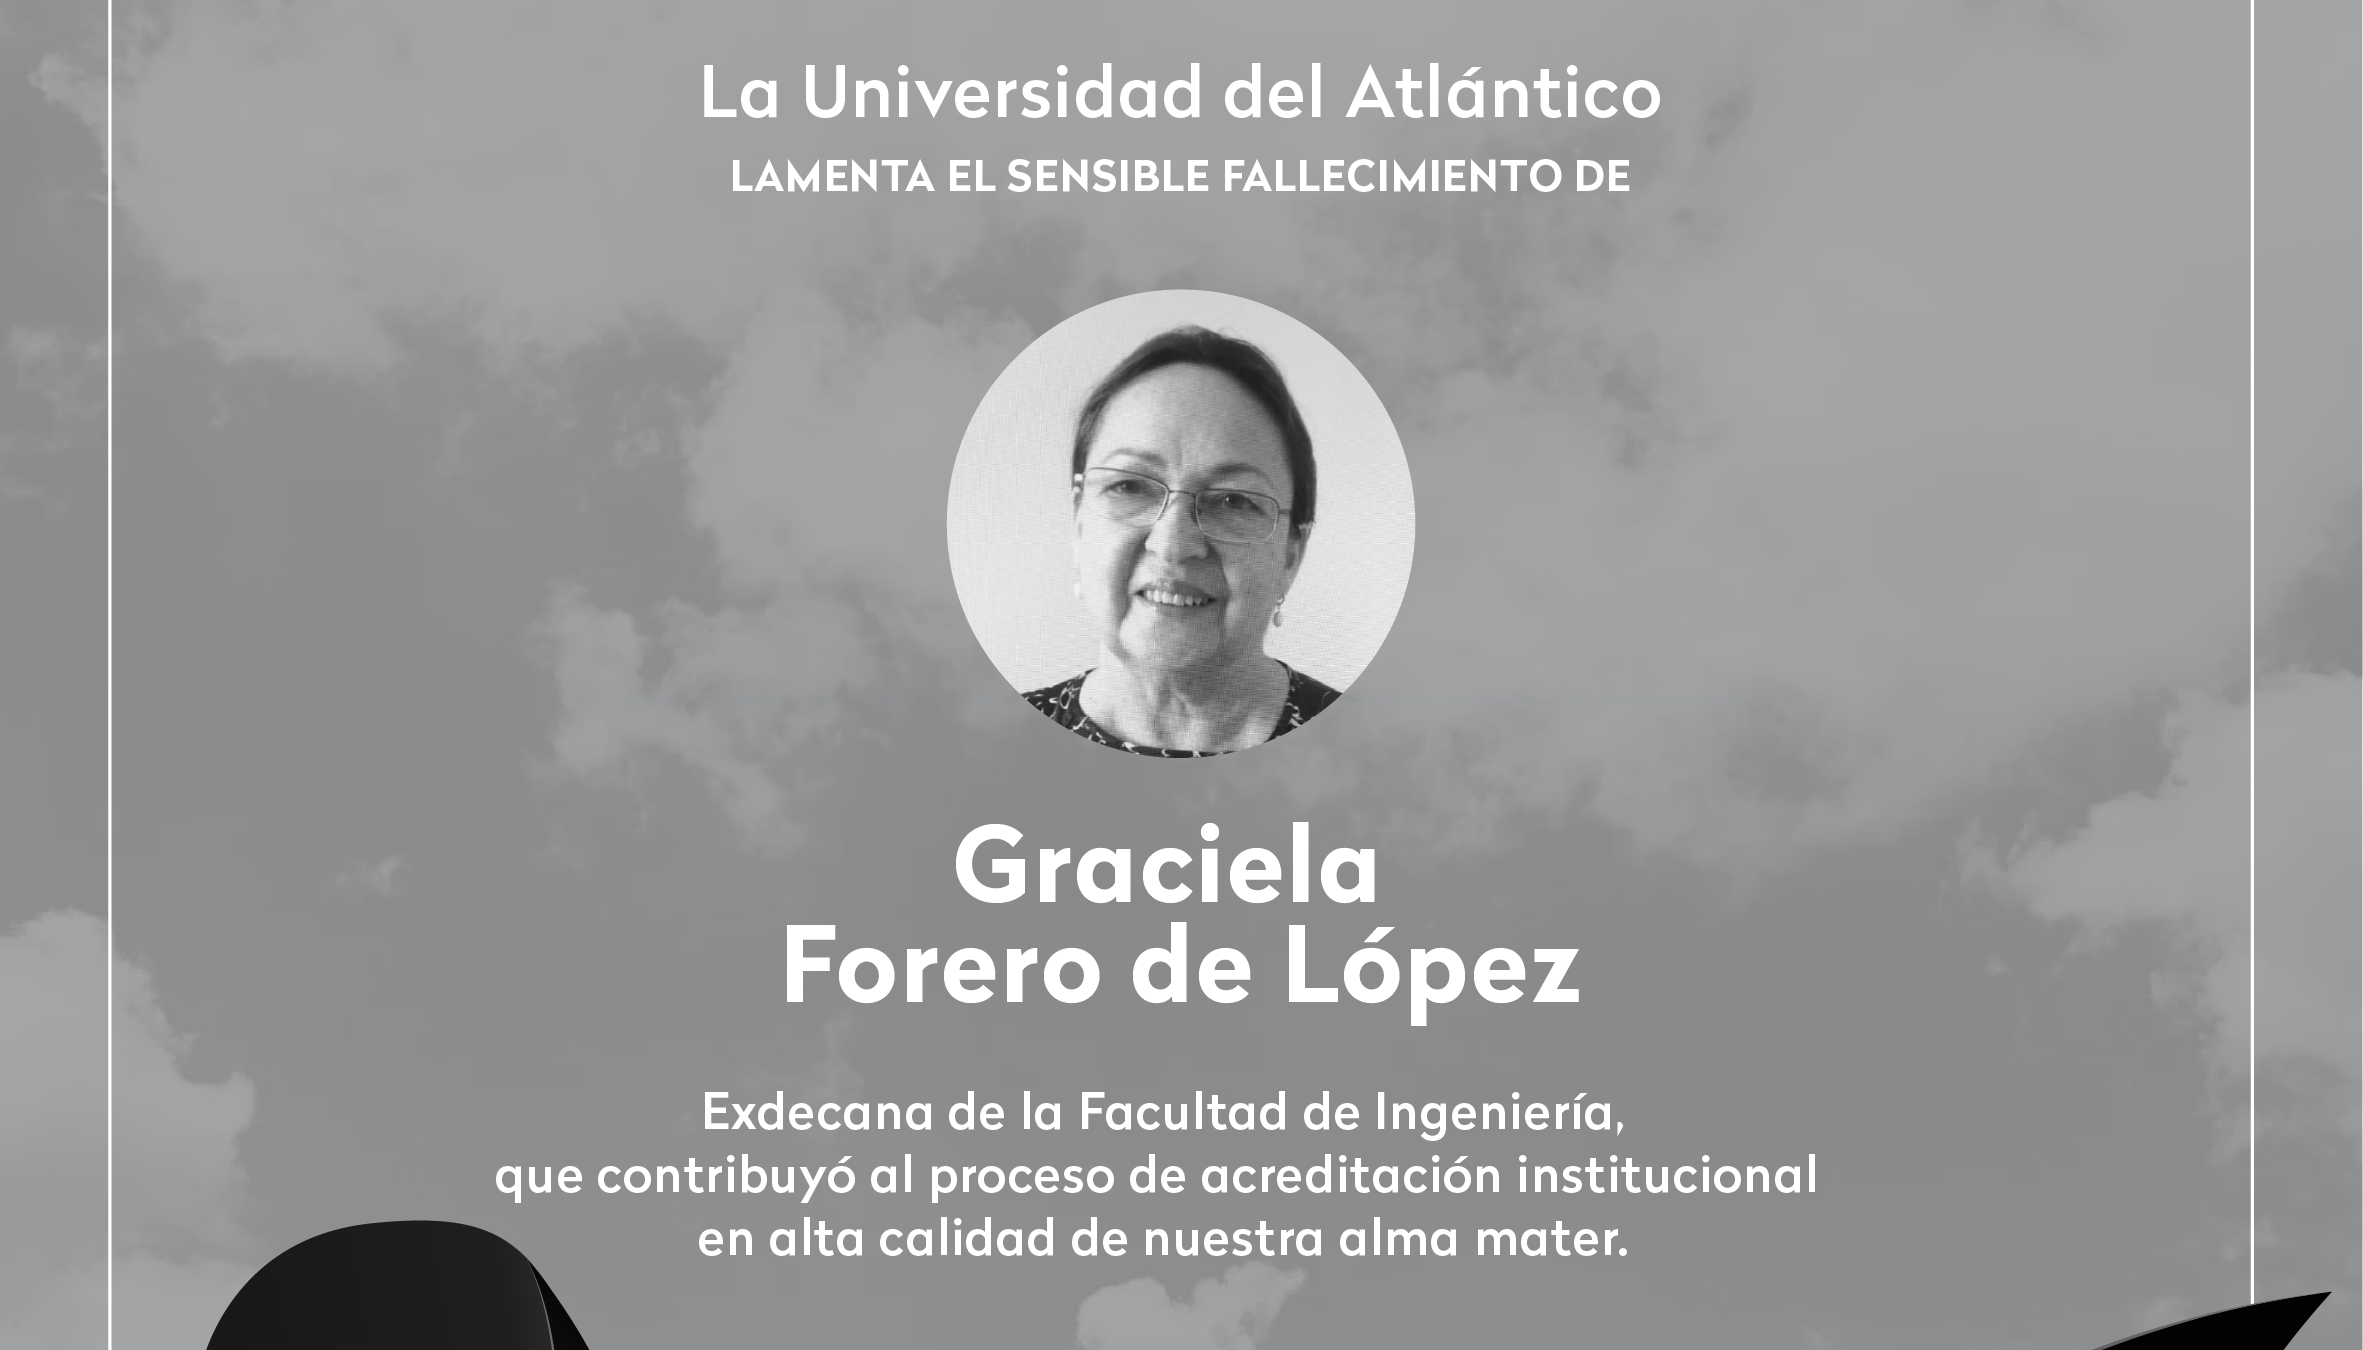 Graciela Forero de López.